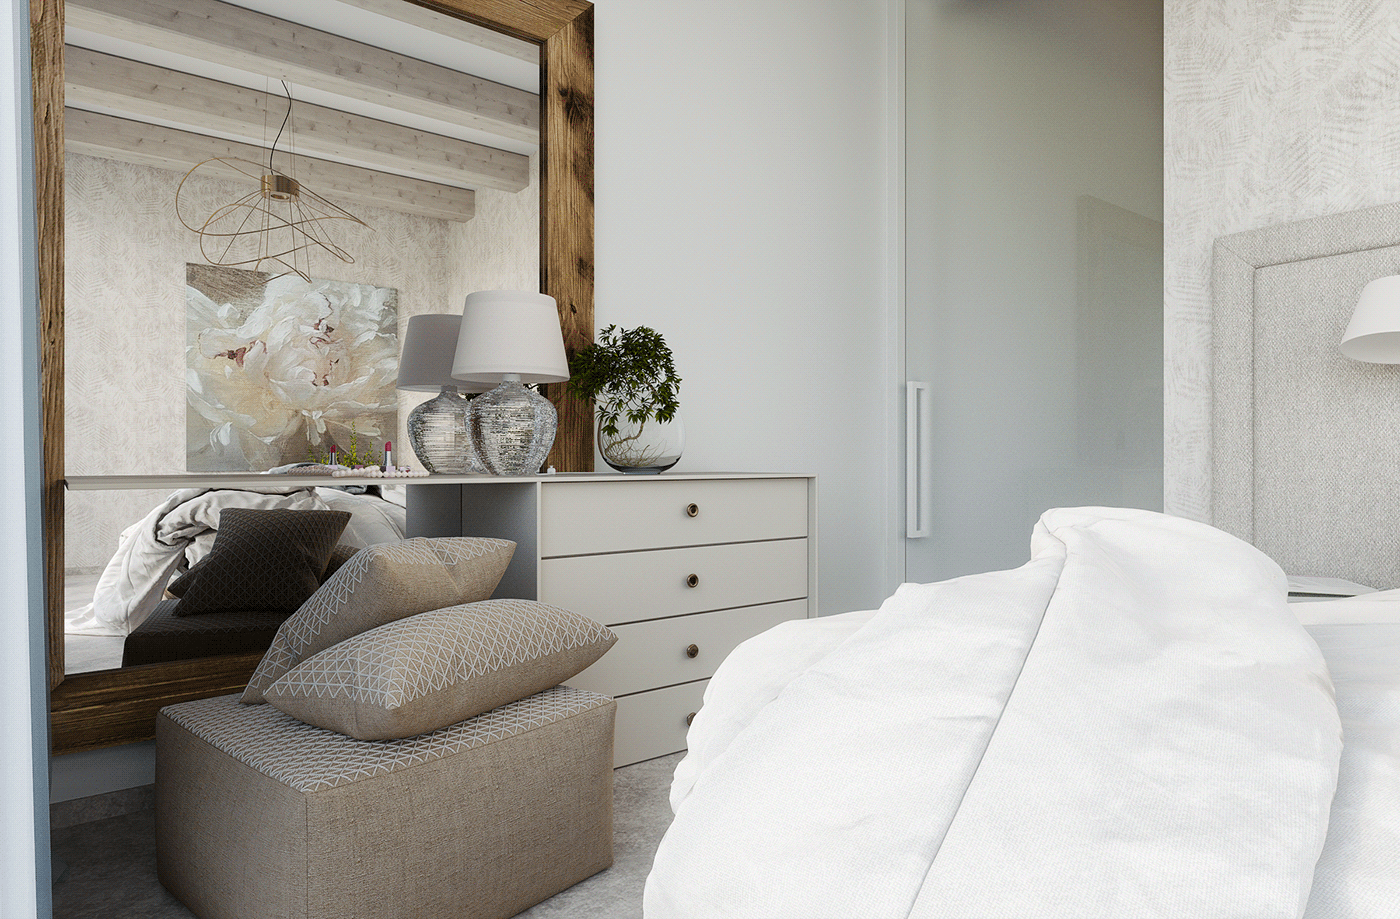 ArcfhViz bedroom Interior interior design  MatPak modo Render ShadersPack visualization onoje